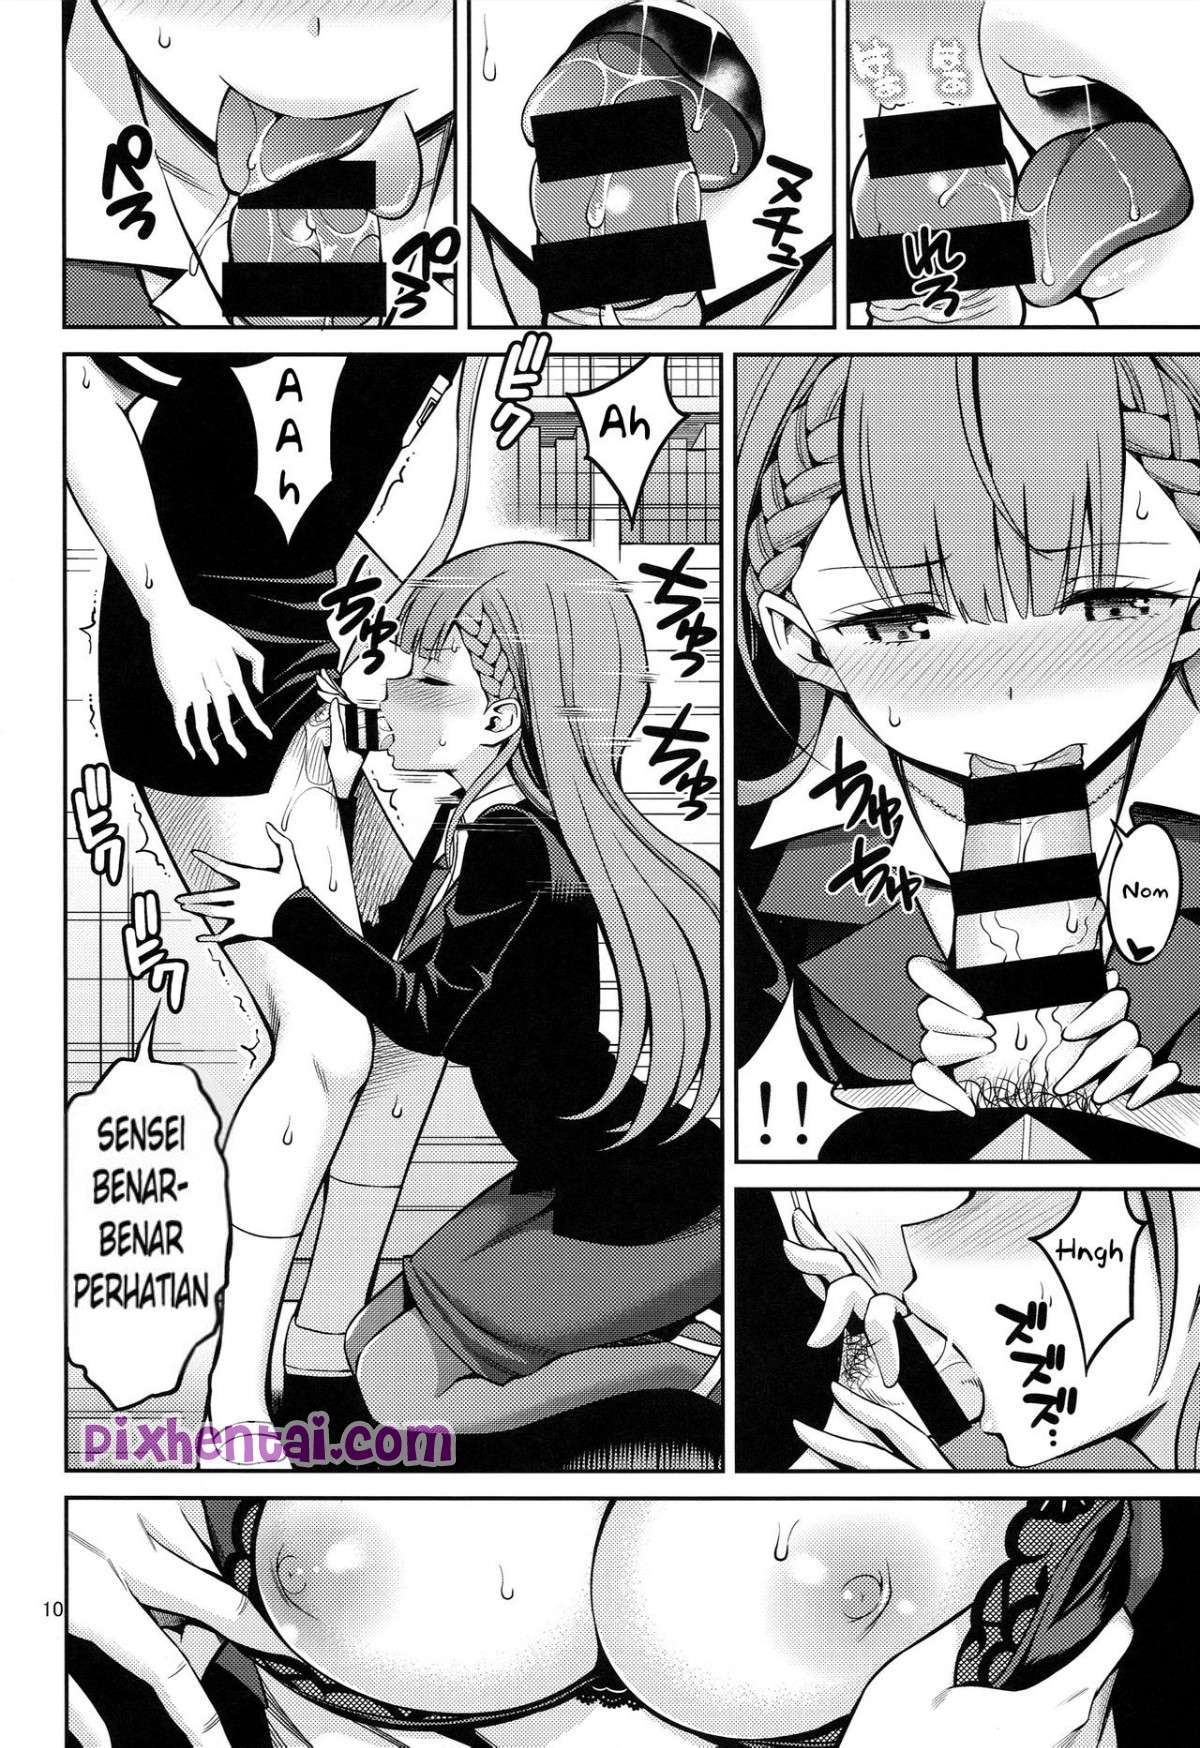 Komik hentai xxx manga sex bokep ketagihan meki ibu guru imut 09